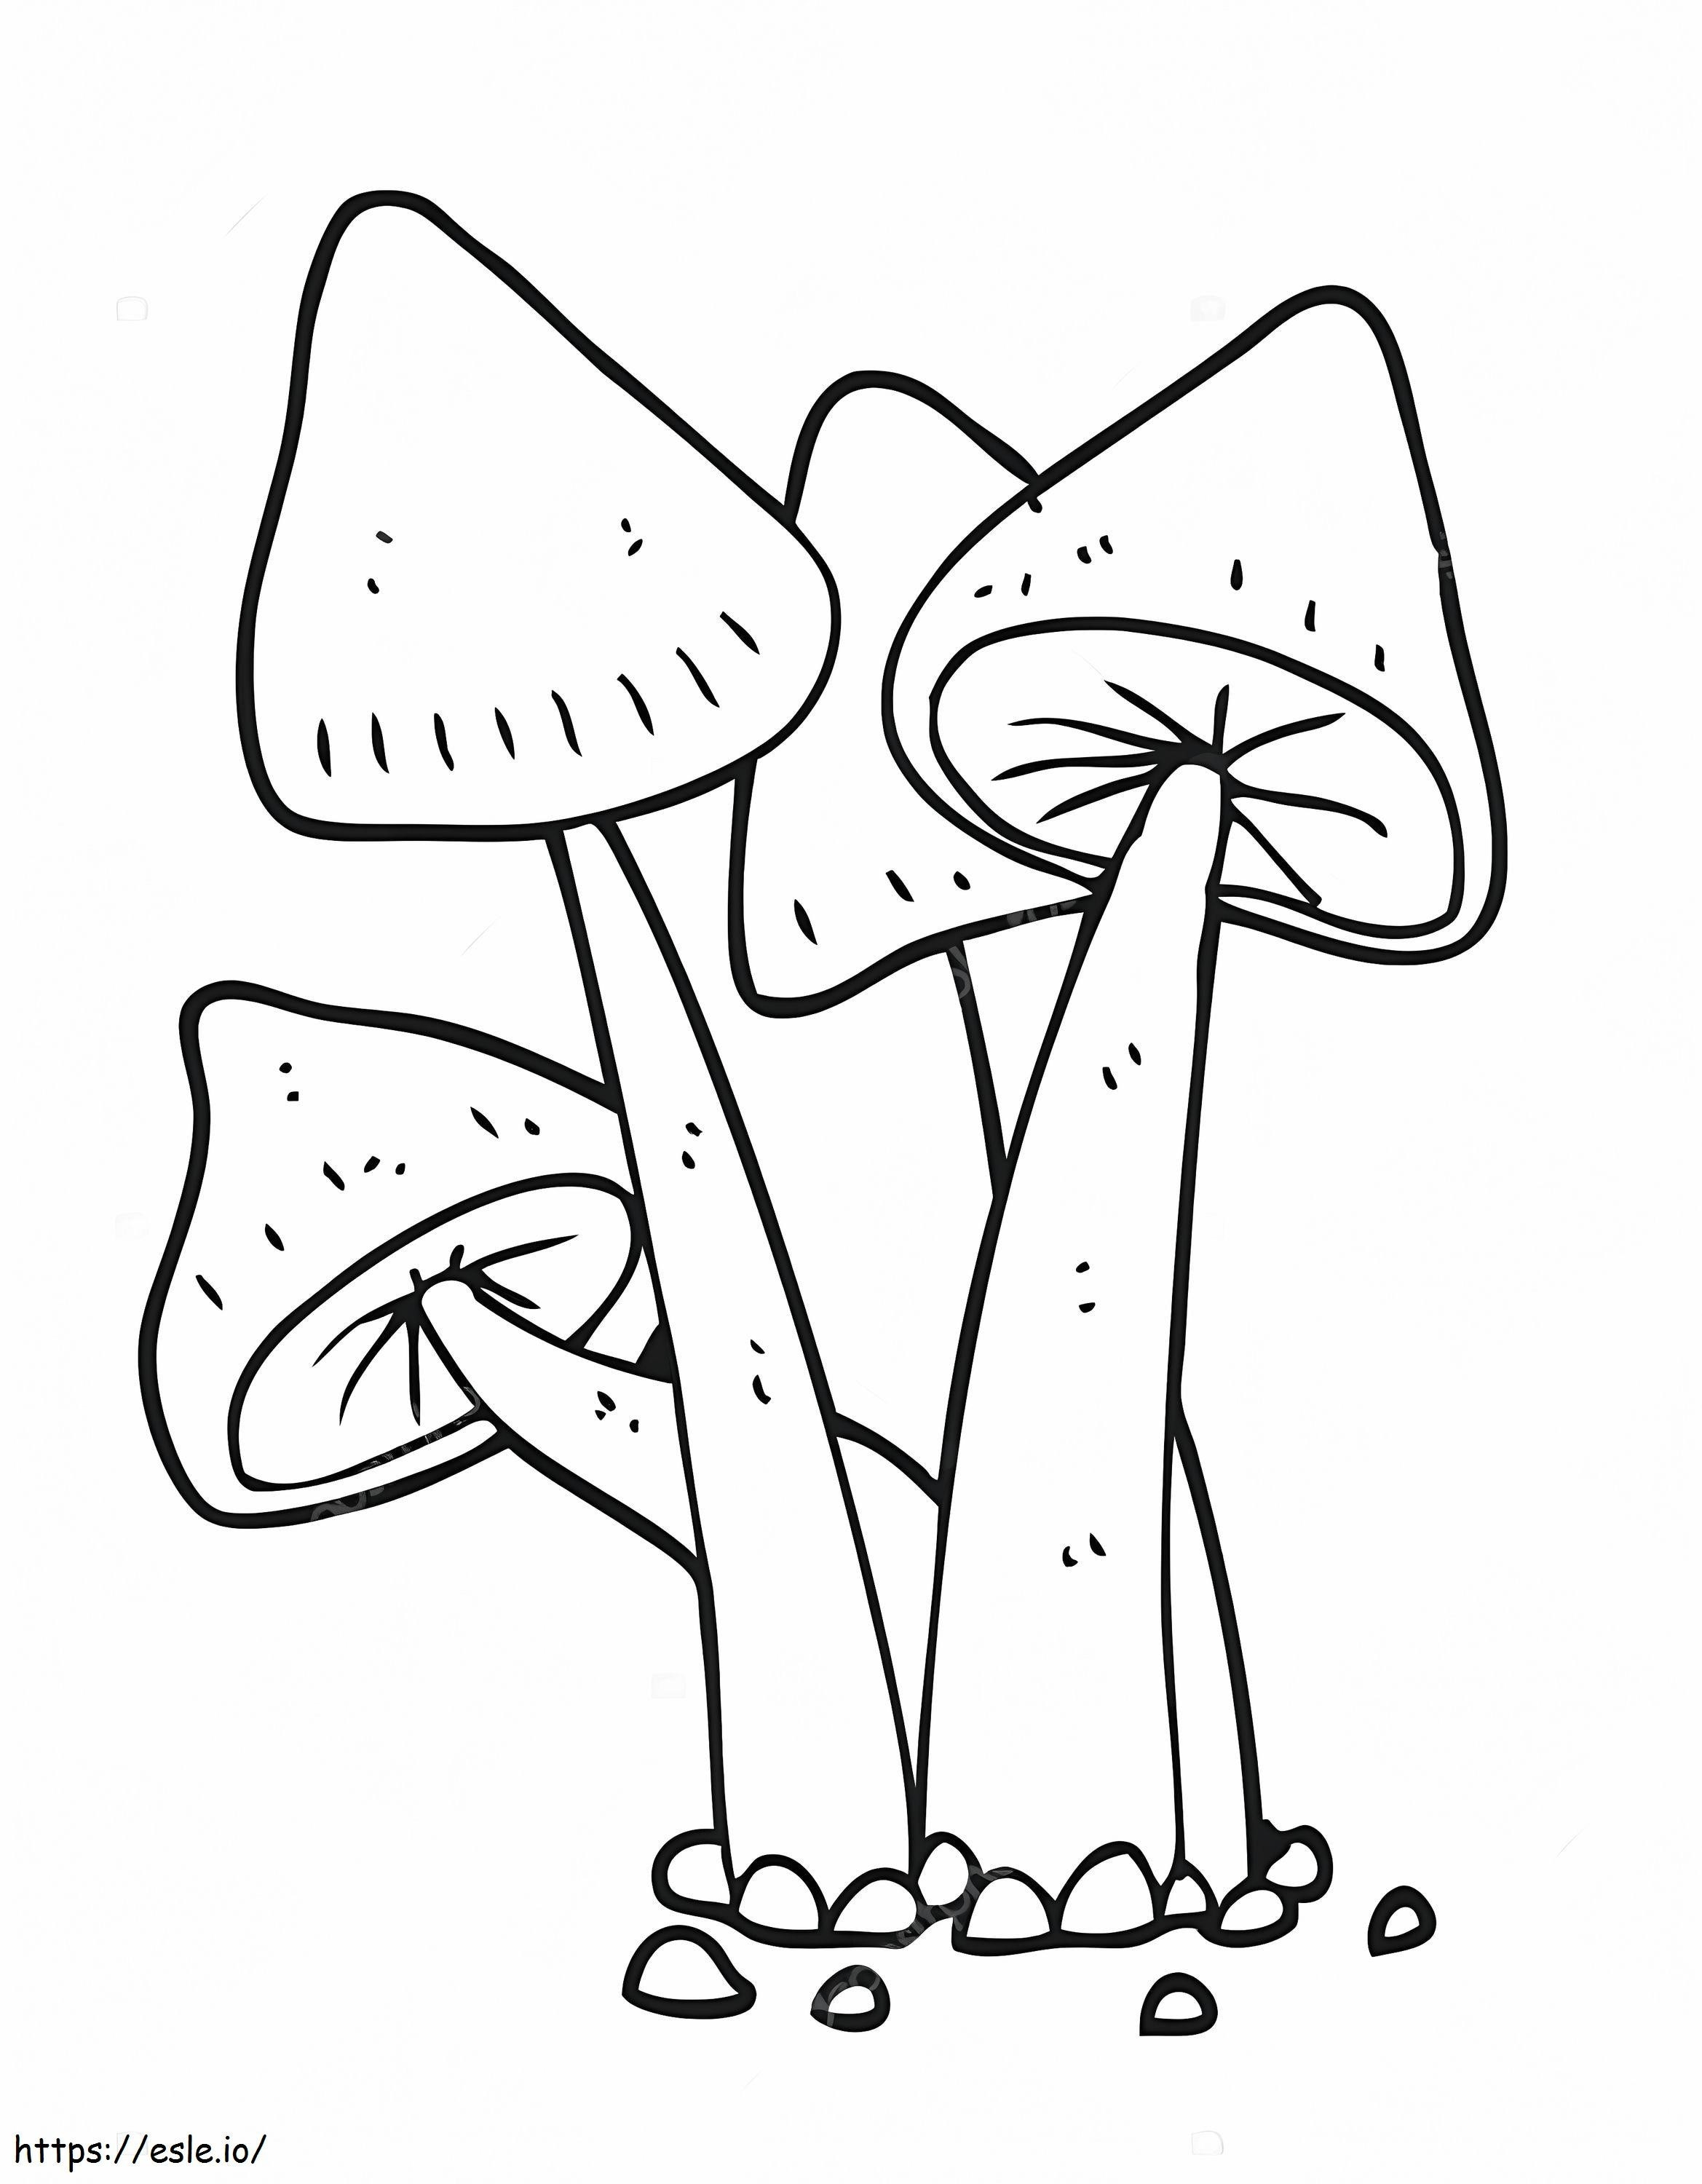 Pilze 6 ausmalbilder